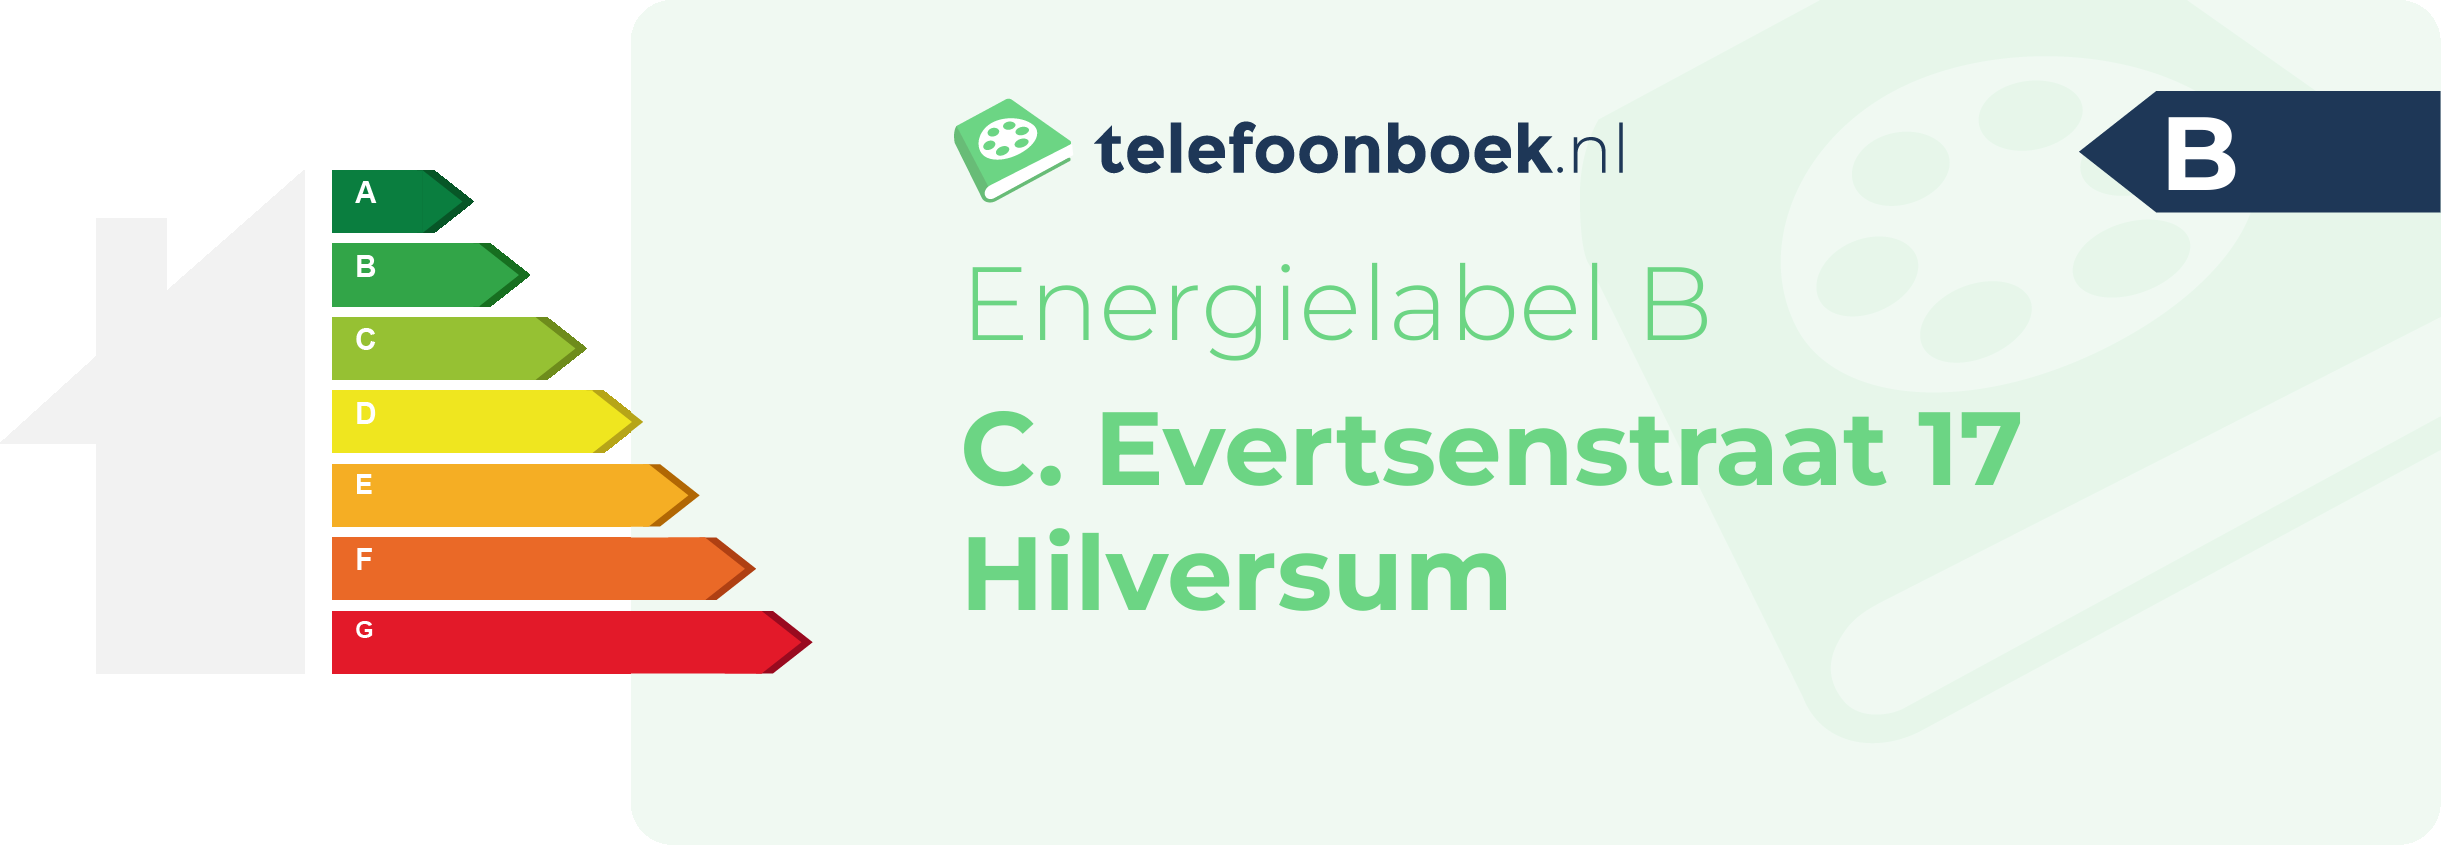 Energielabel C. Evertsenstraat 17 Hilversum